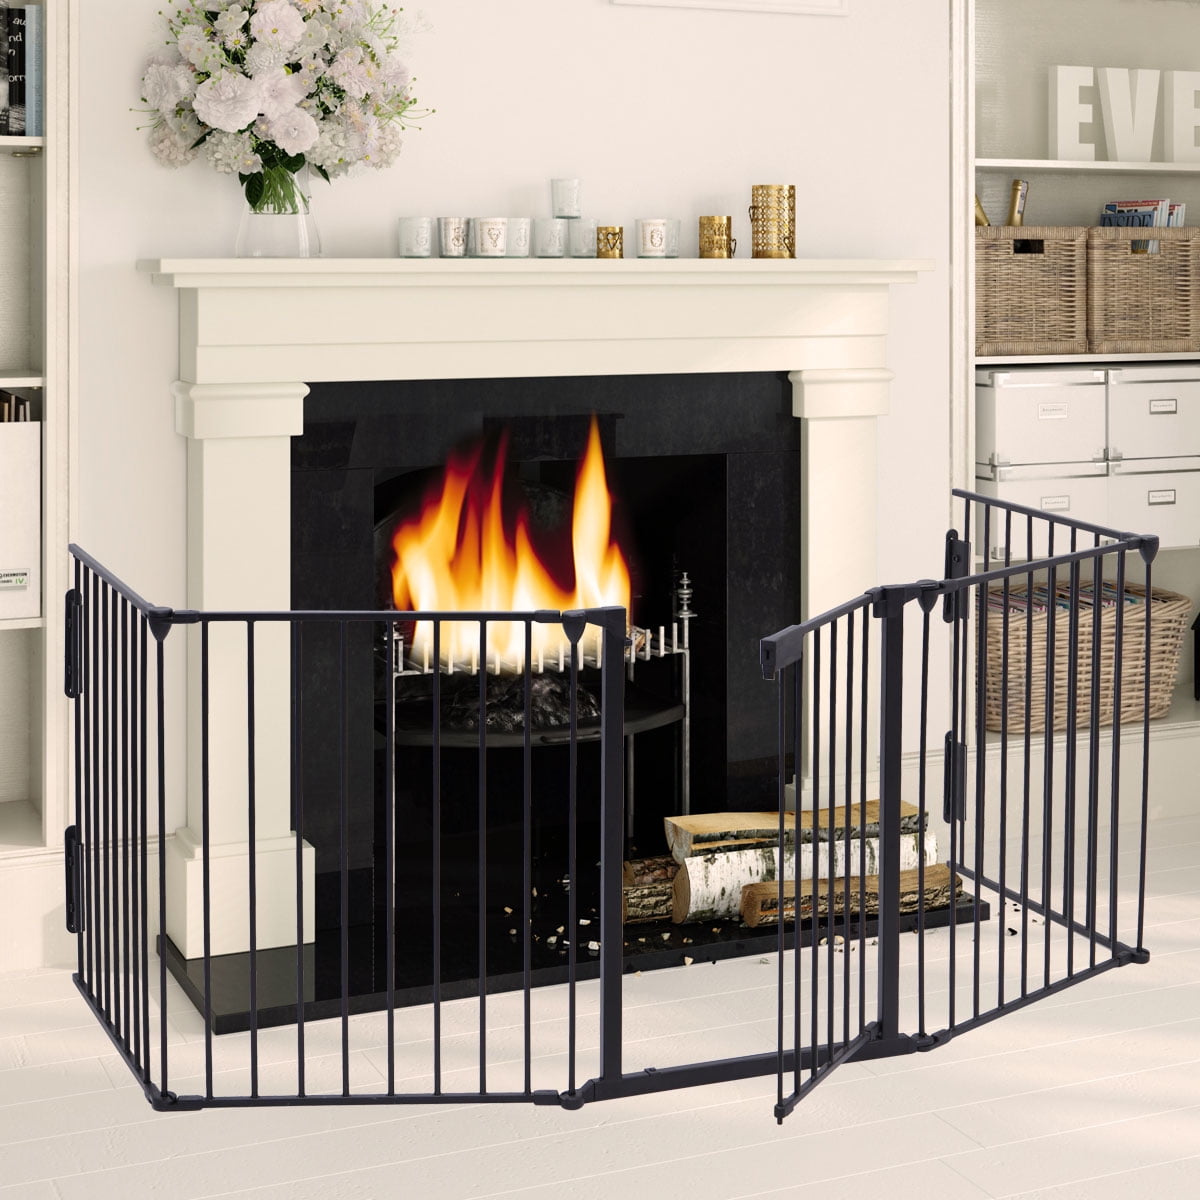 Living Room Fireplace Fence Baby Safety Pet Gate Dog Barrier Enclose Indoor Home 